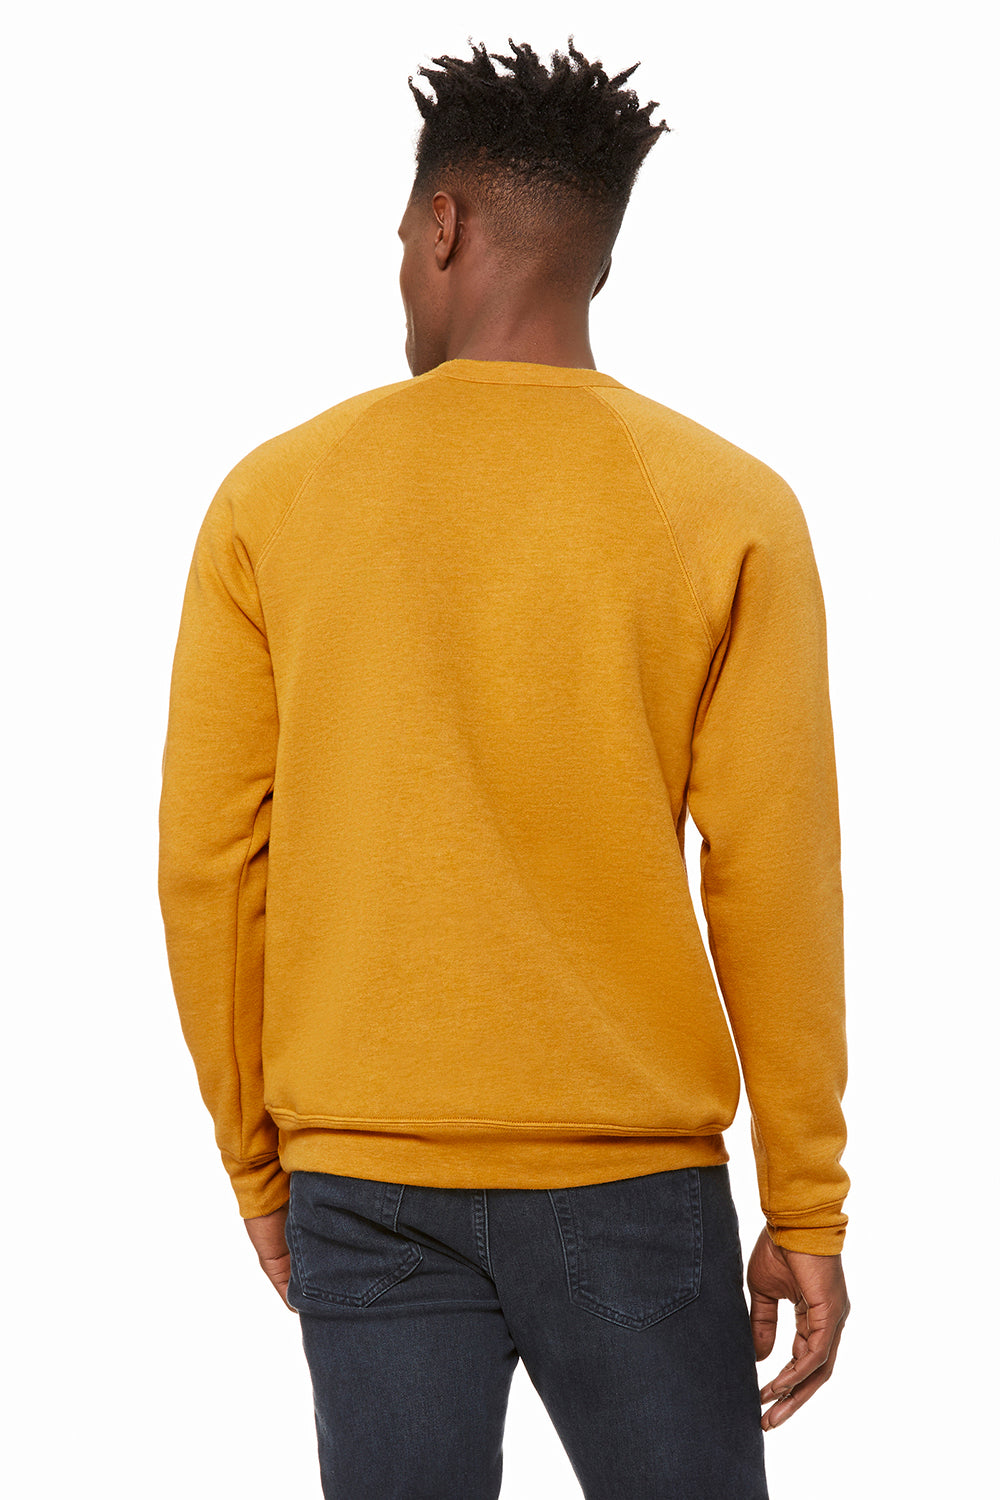 Bella + Canvas BC3901/3901 Mens Sponge Fleece Crewneck Sweatshirt Heather Mustard Yellow Model Back